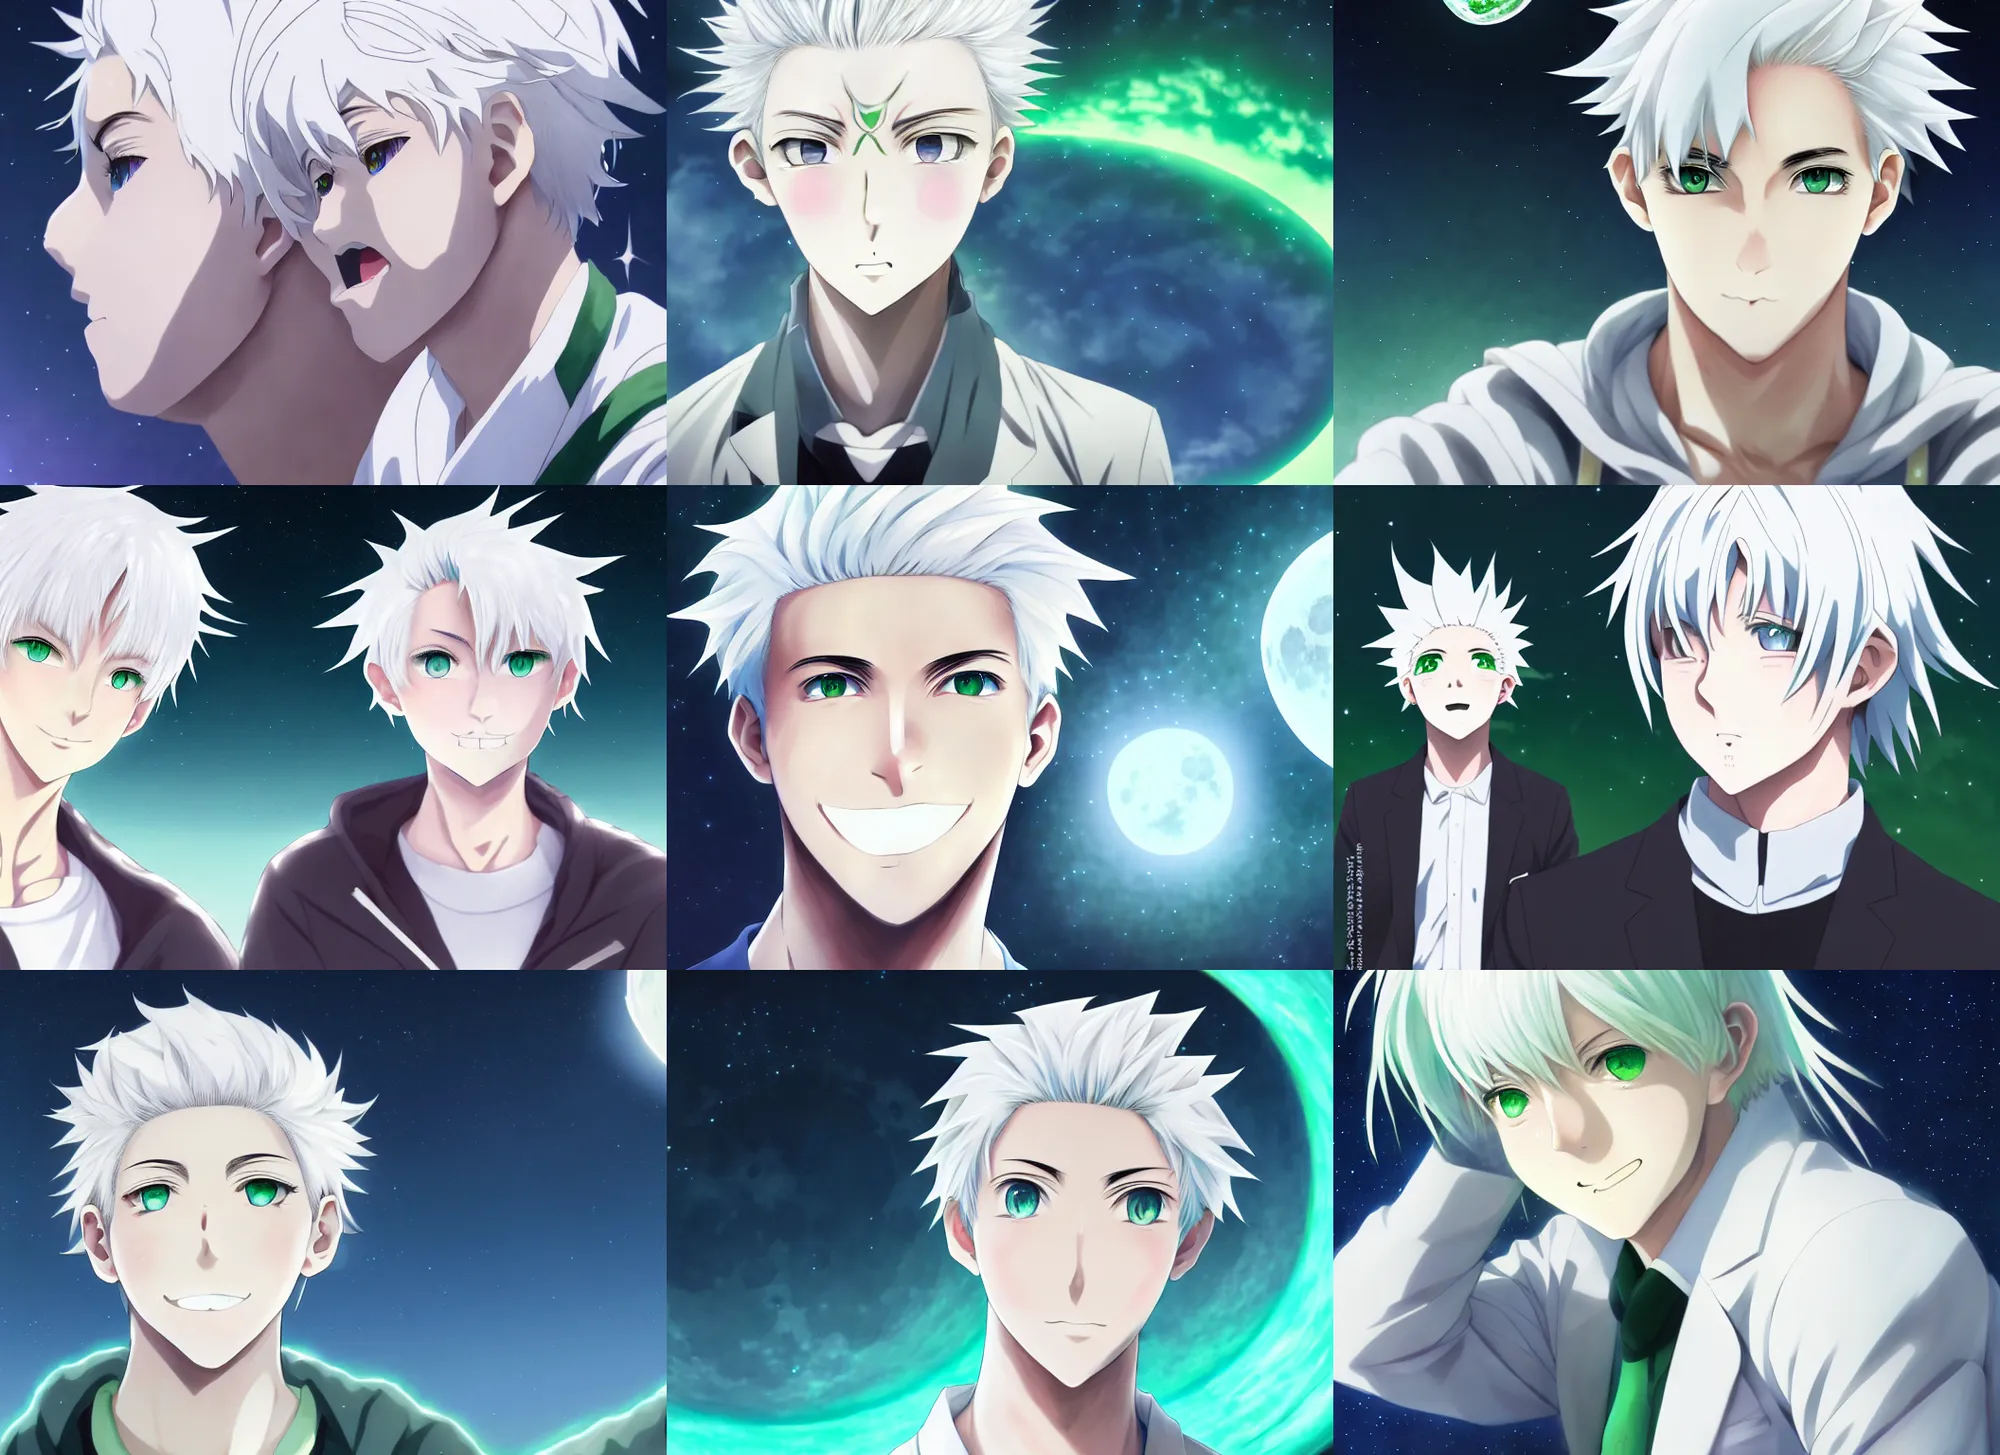 Prompt: white haired young guy with green eyes on the moon, smiling, beautiful anime portrait, symmetry, ecchi style, makoto shinkai, genshin impact, hyper realistic, high quality, art, long shot, fisheye